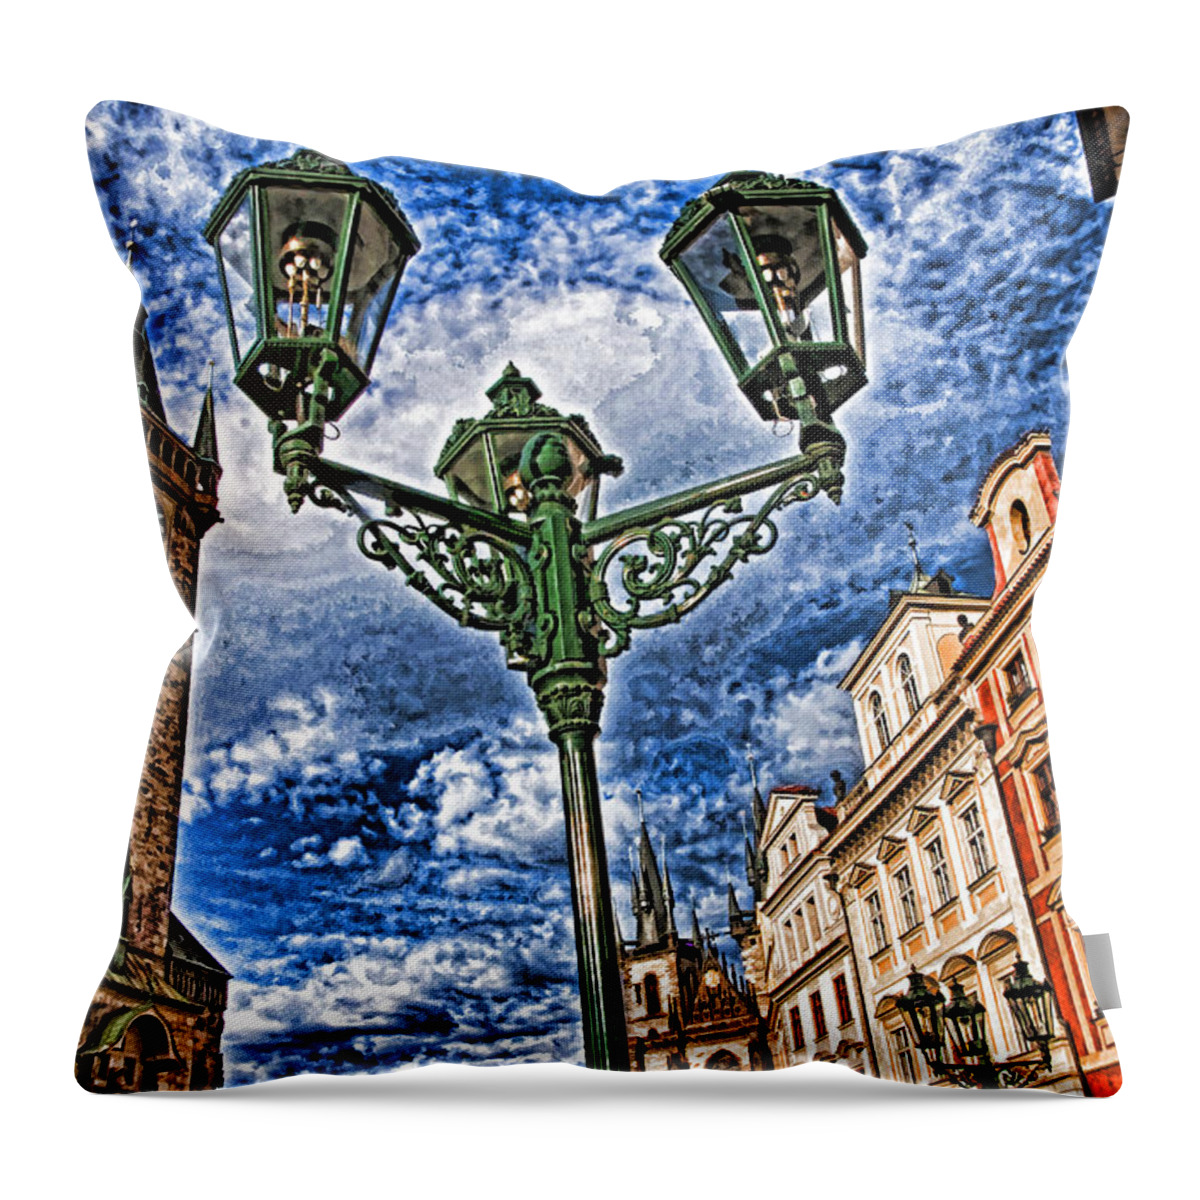 Czech Republic Throw Pillow featuring the photograph Old Town Prague #1 by Dennis Cox